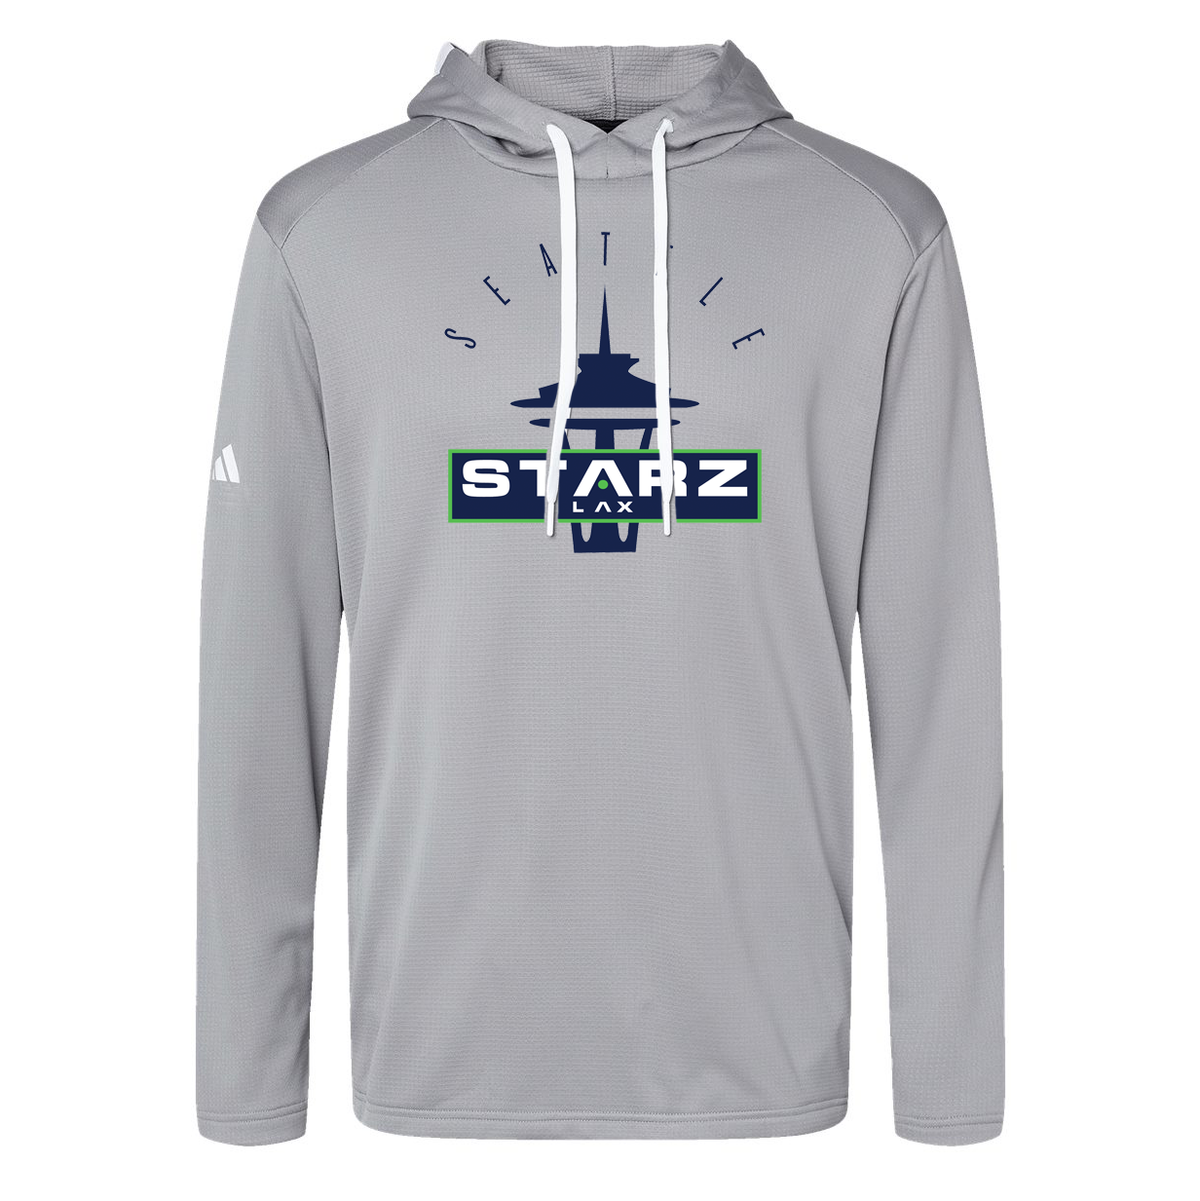 Seattle Starz Lacrosse Club Adidas Textured Hooded Sweatshirt